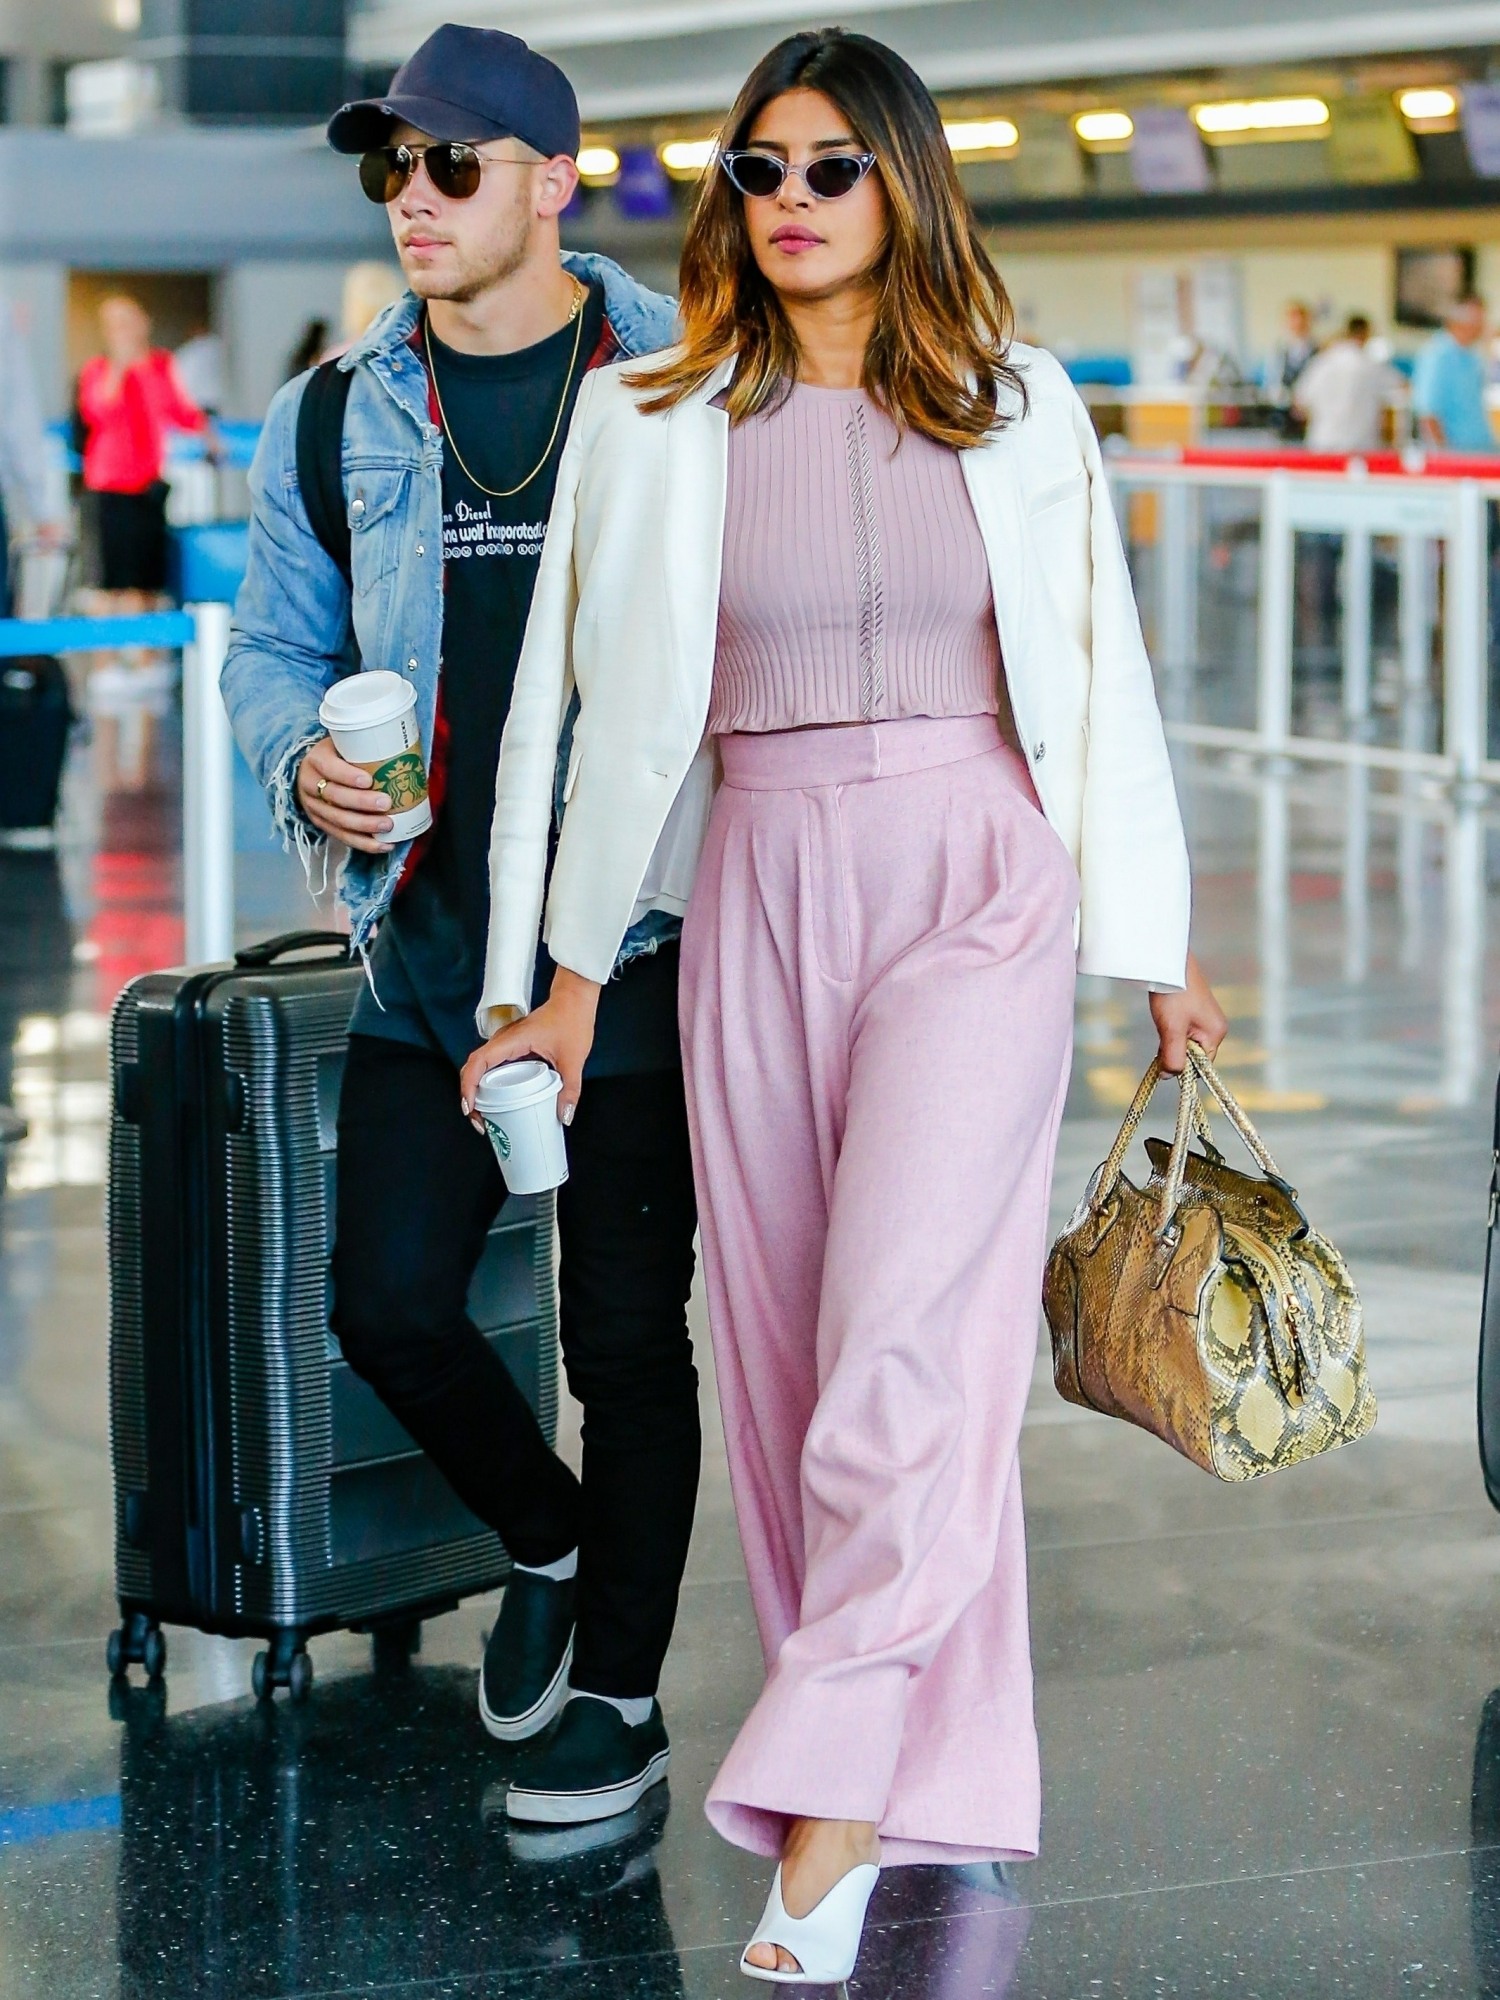 Priyanka Chopra and Nick Jonas make their relationship official arriving at JFK together